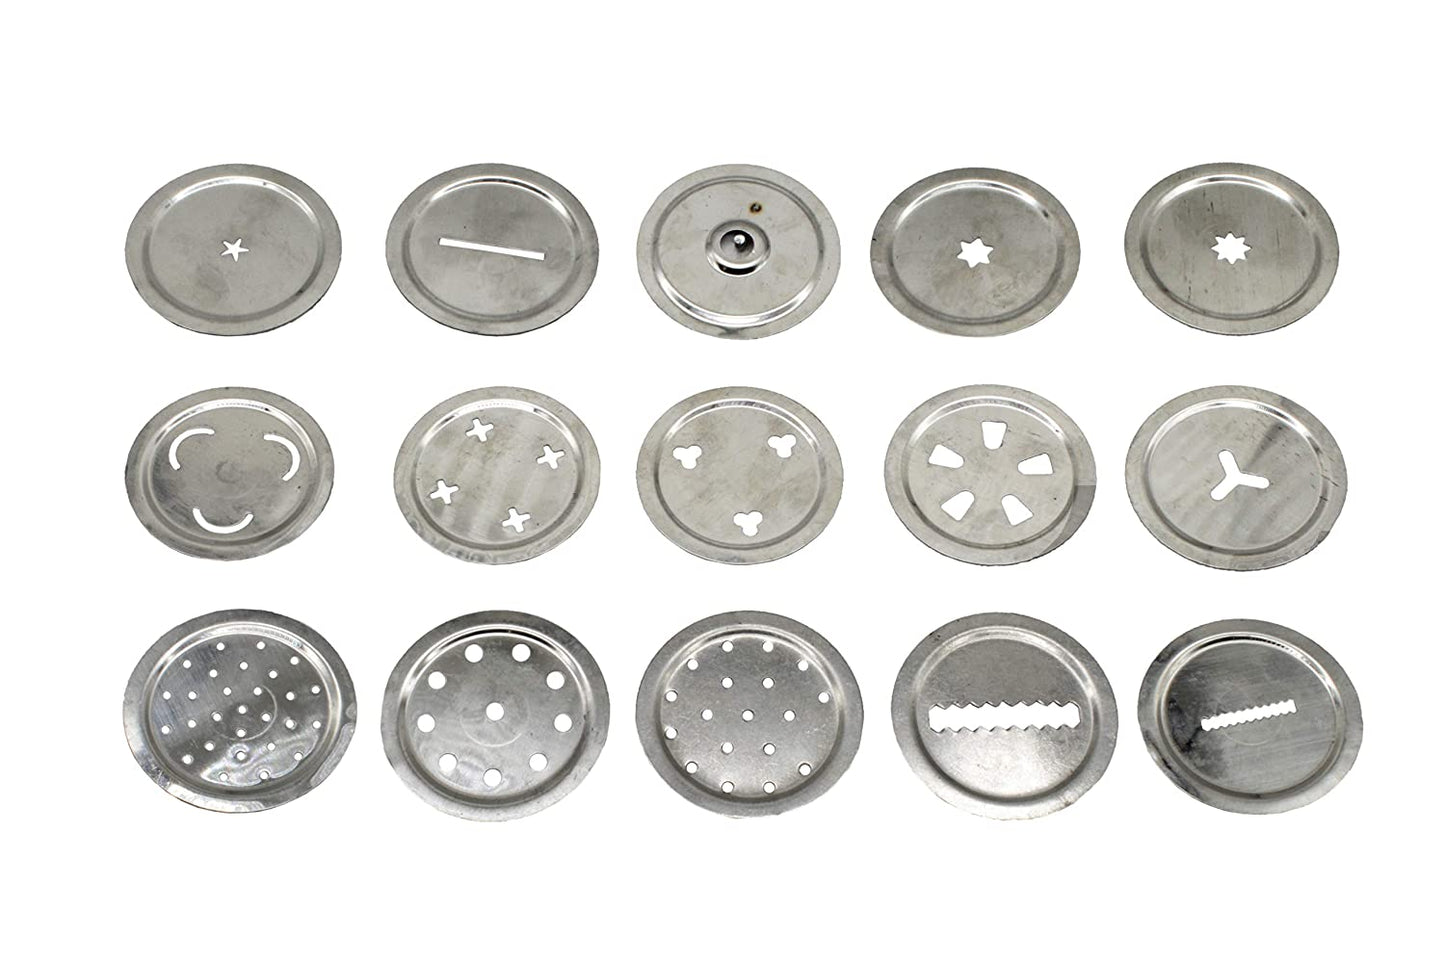 Stainless Steel Murukku Maker | Kitchen Press | Murukku Presser With Different Shape 15 Jali Plates and 6 Icing Nozzles